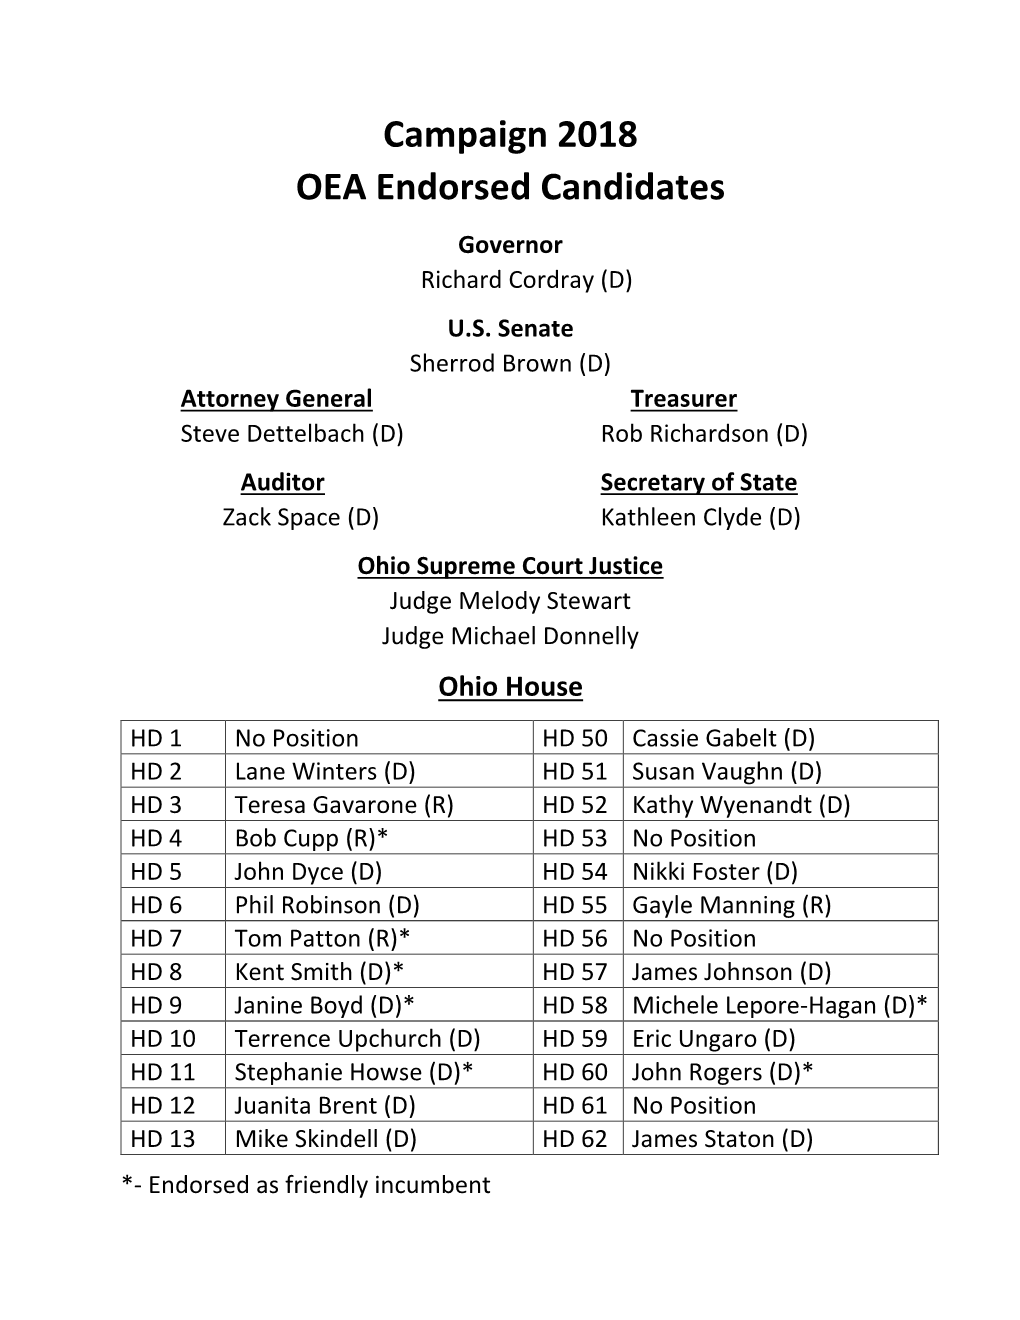 Campaign 2018 OEA Endorsed Candidates Governor Richard Cordray (D) U.S